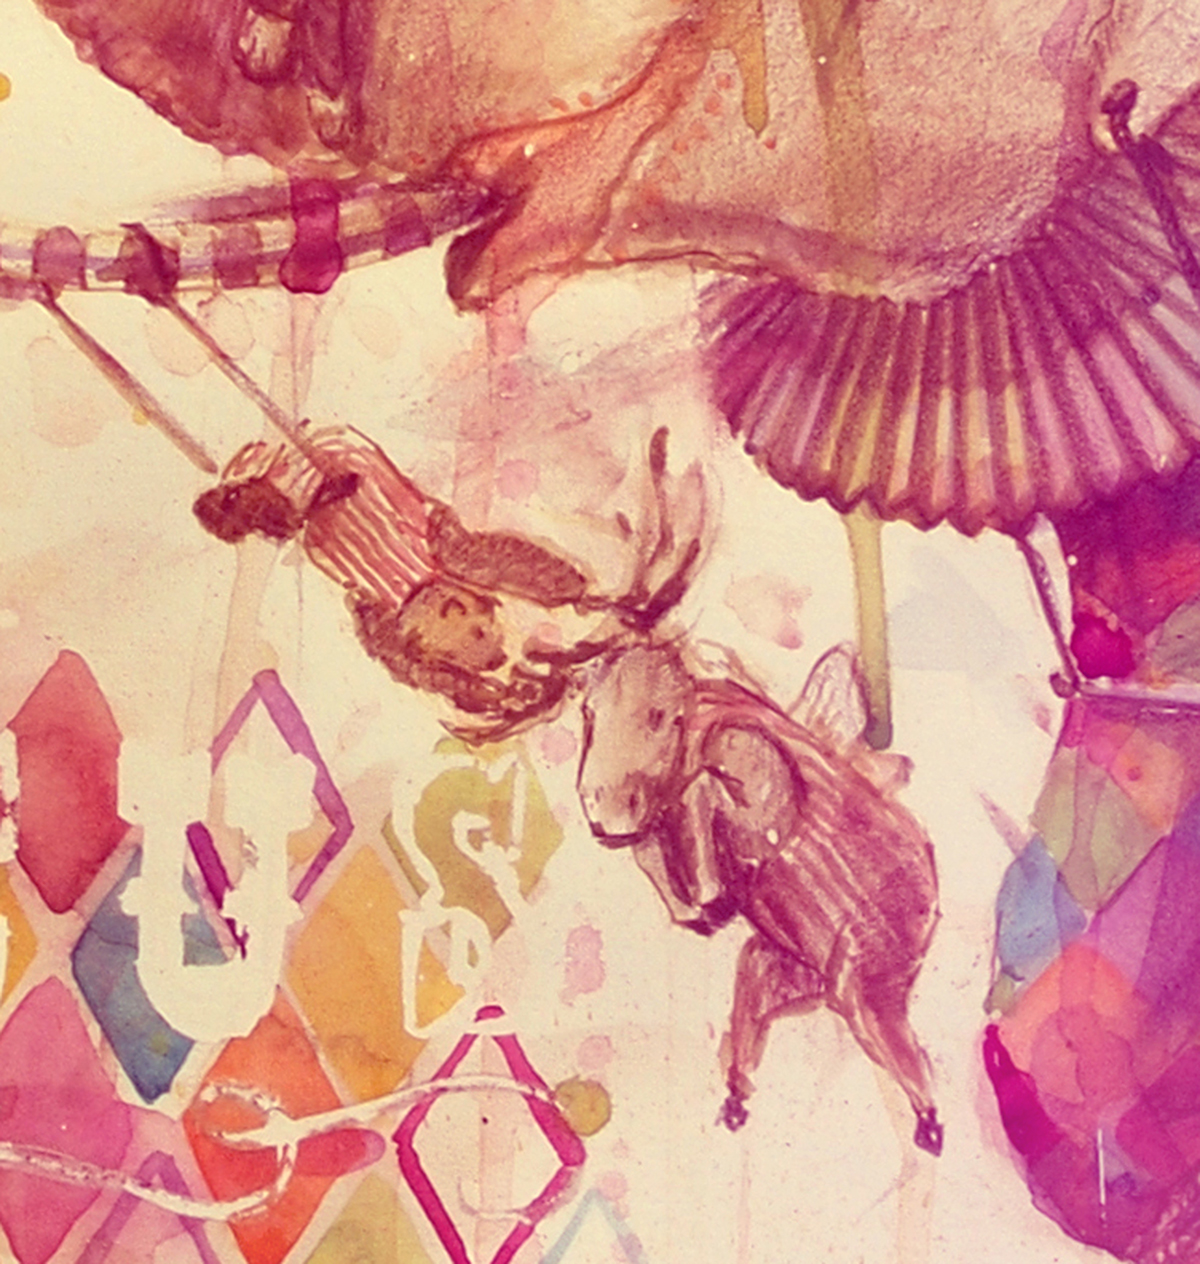 shkicaz  duper  grafilogika  Marija  Watercolors  saule dramblys  elephant animal  Circus  Trip